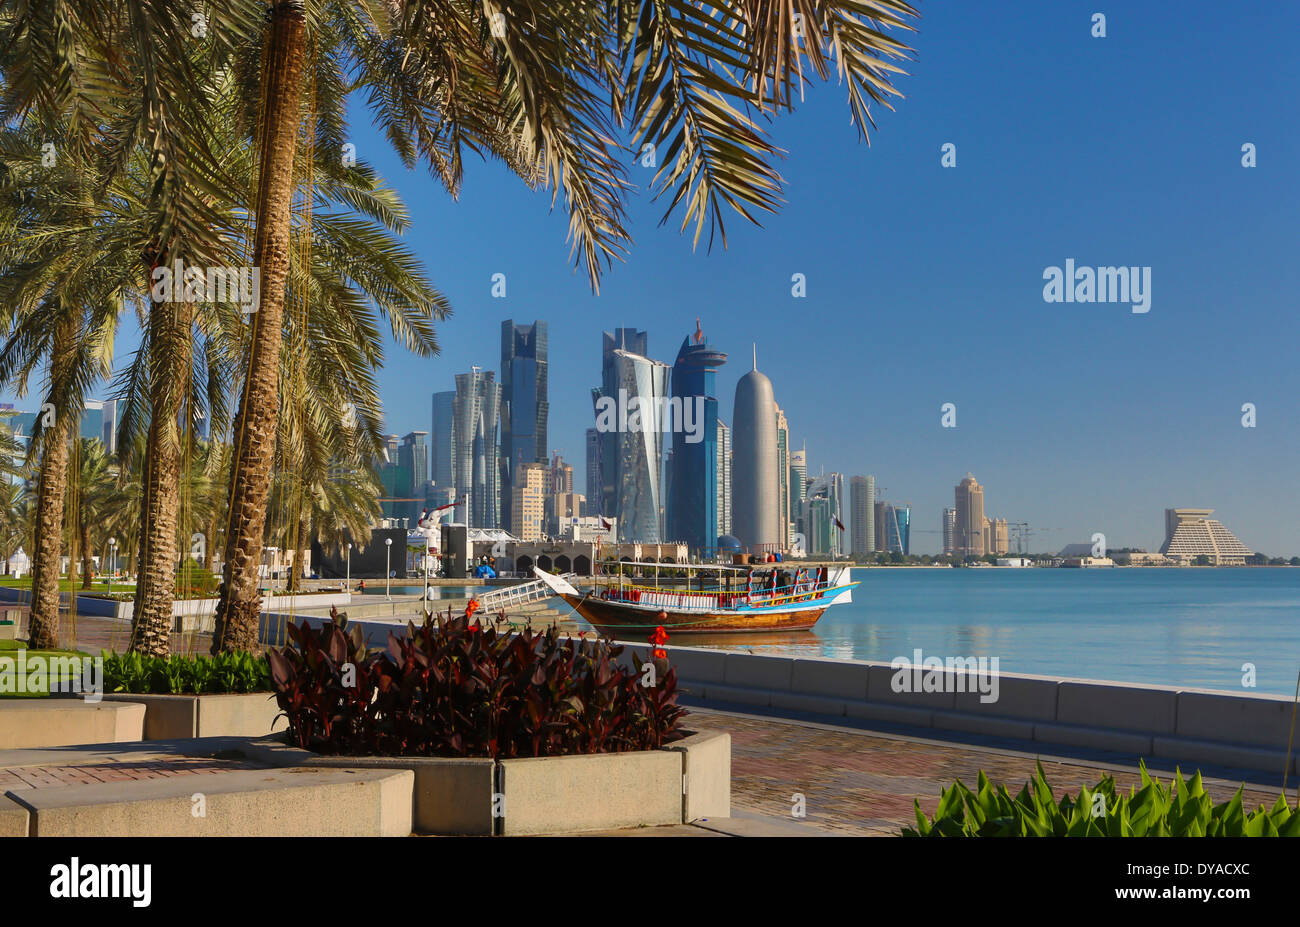 Al Bidda Burj Doha Katar Nahost World Trade Center Architektur Bucht Boot Stadt bunte Corniche futuristische Palm Tree p Stockfoto